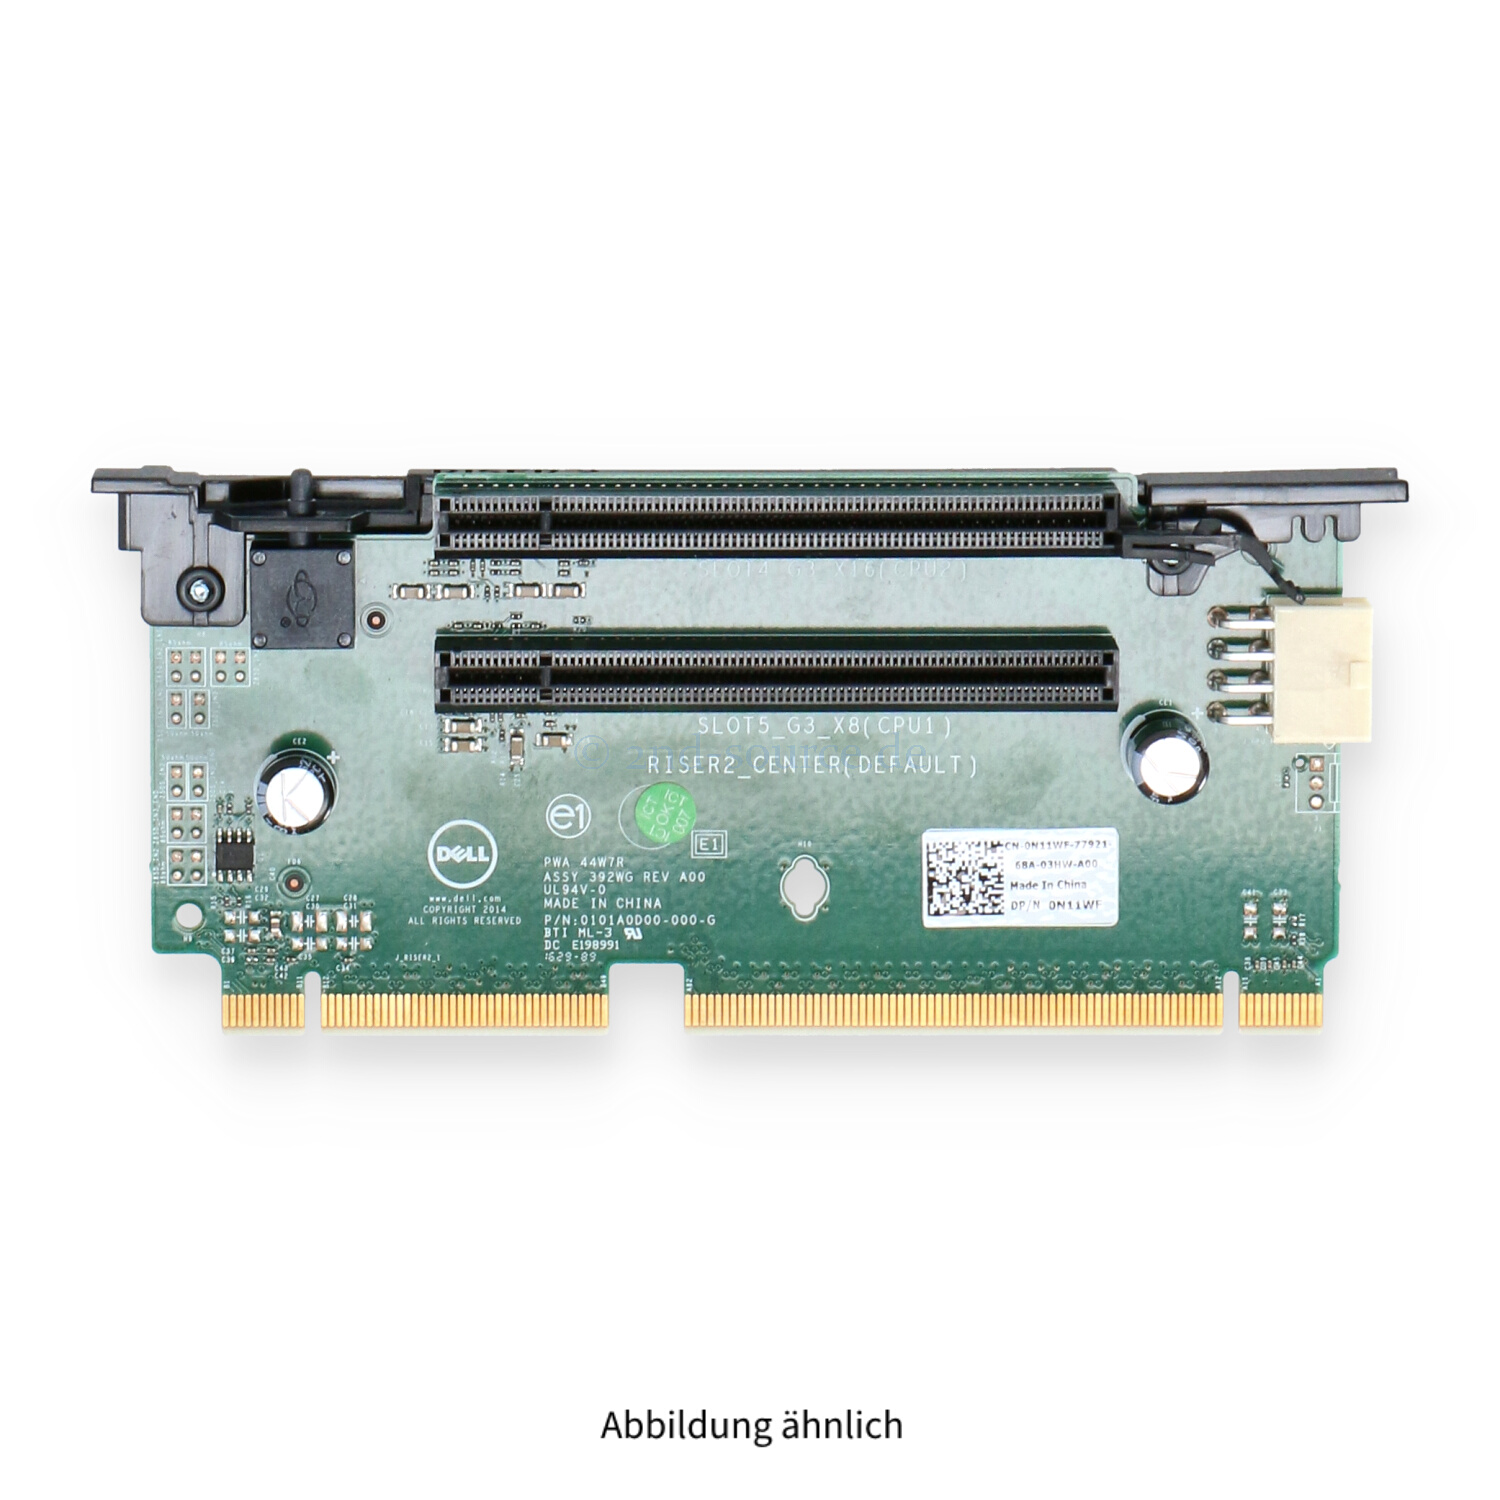 Dell 2x8 PCI Riser 2 Center Default PowerEdge R730 R730XD N11WF 0N11WF